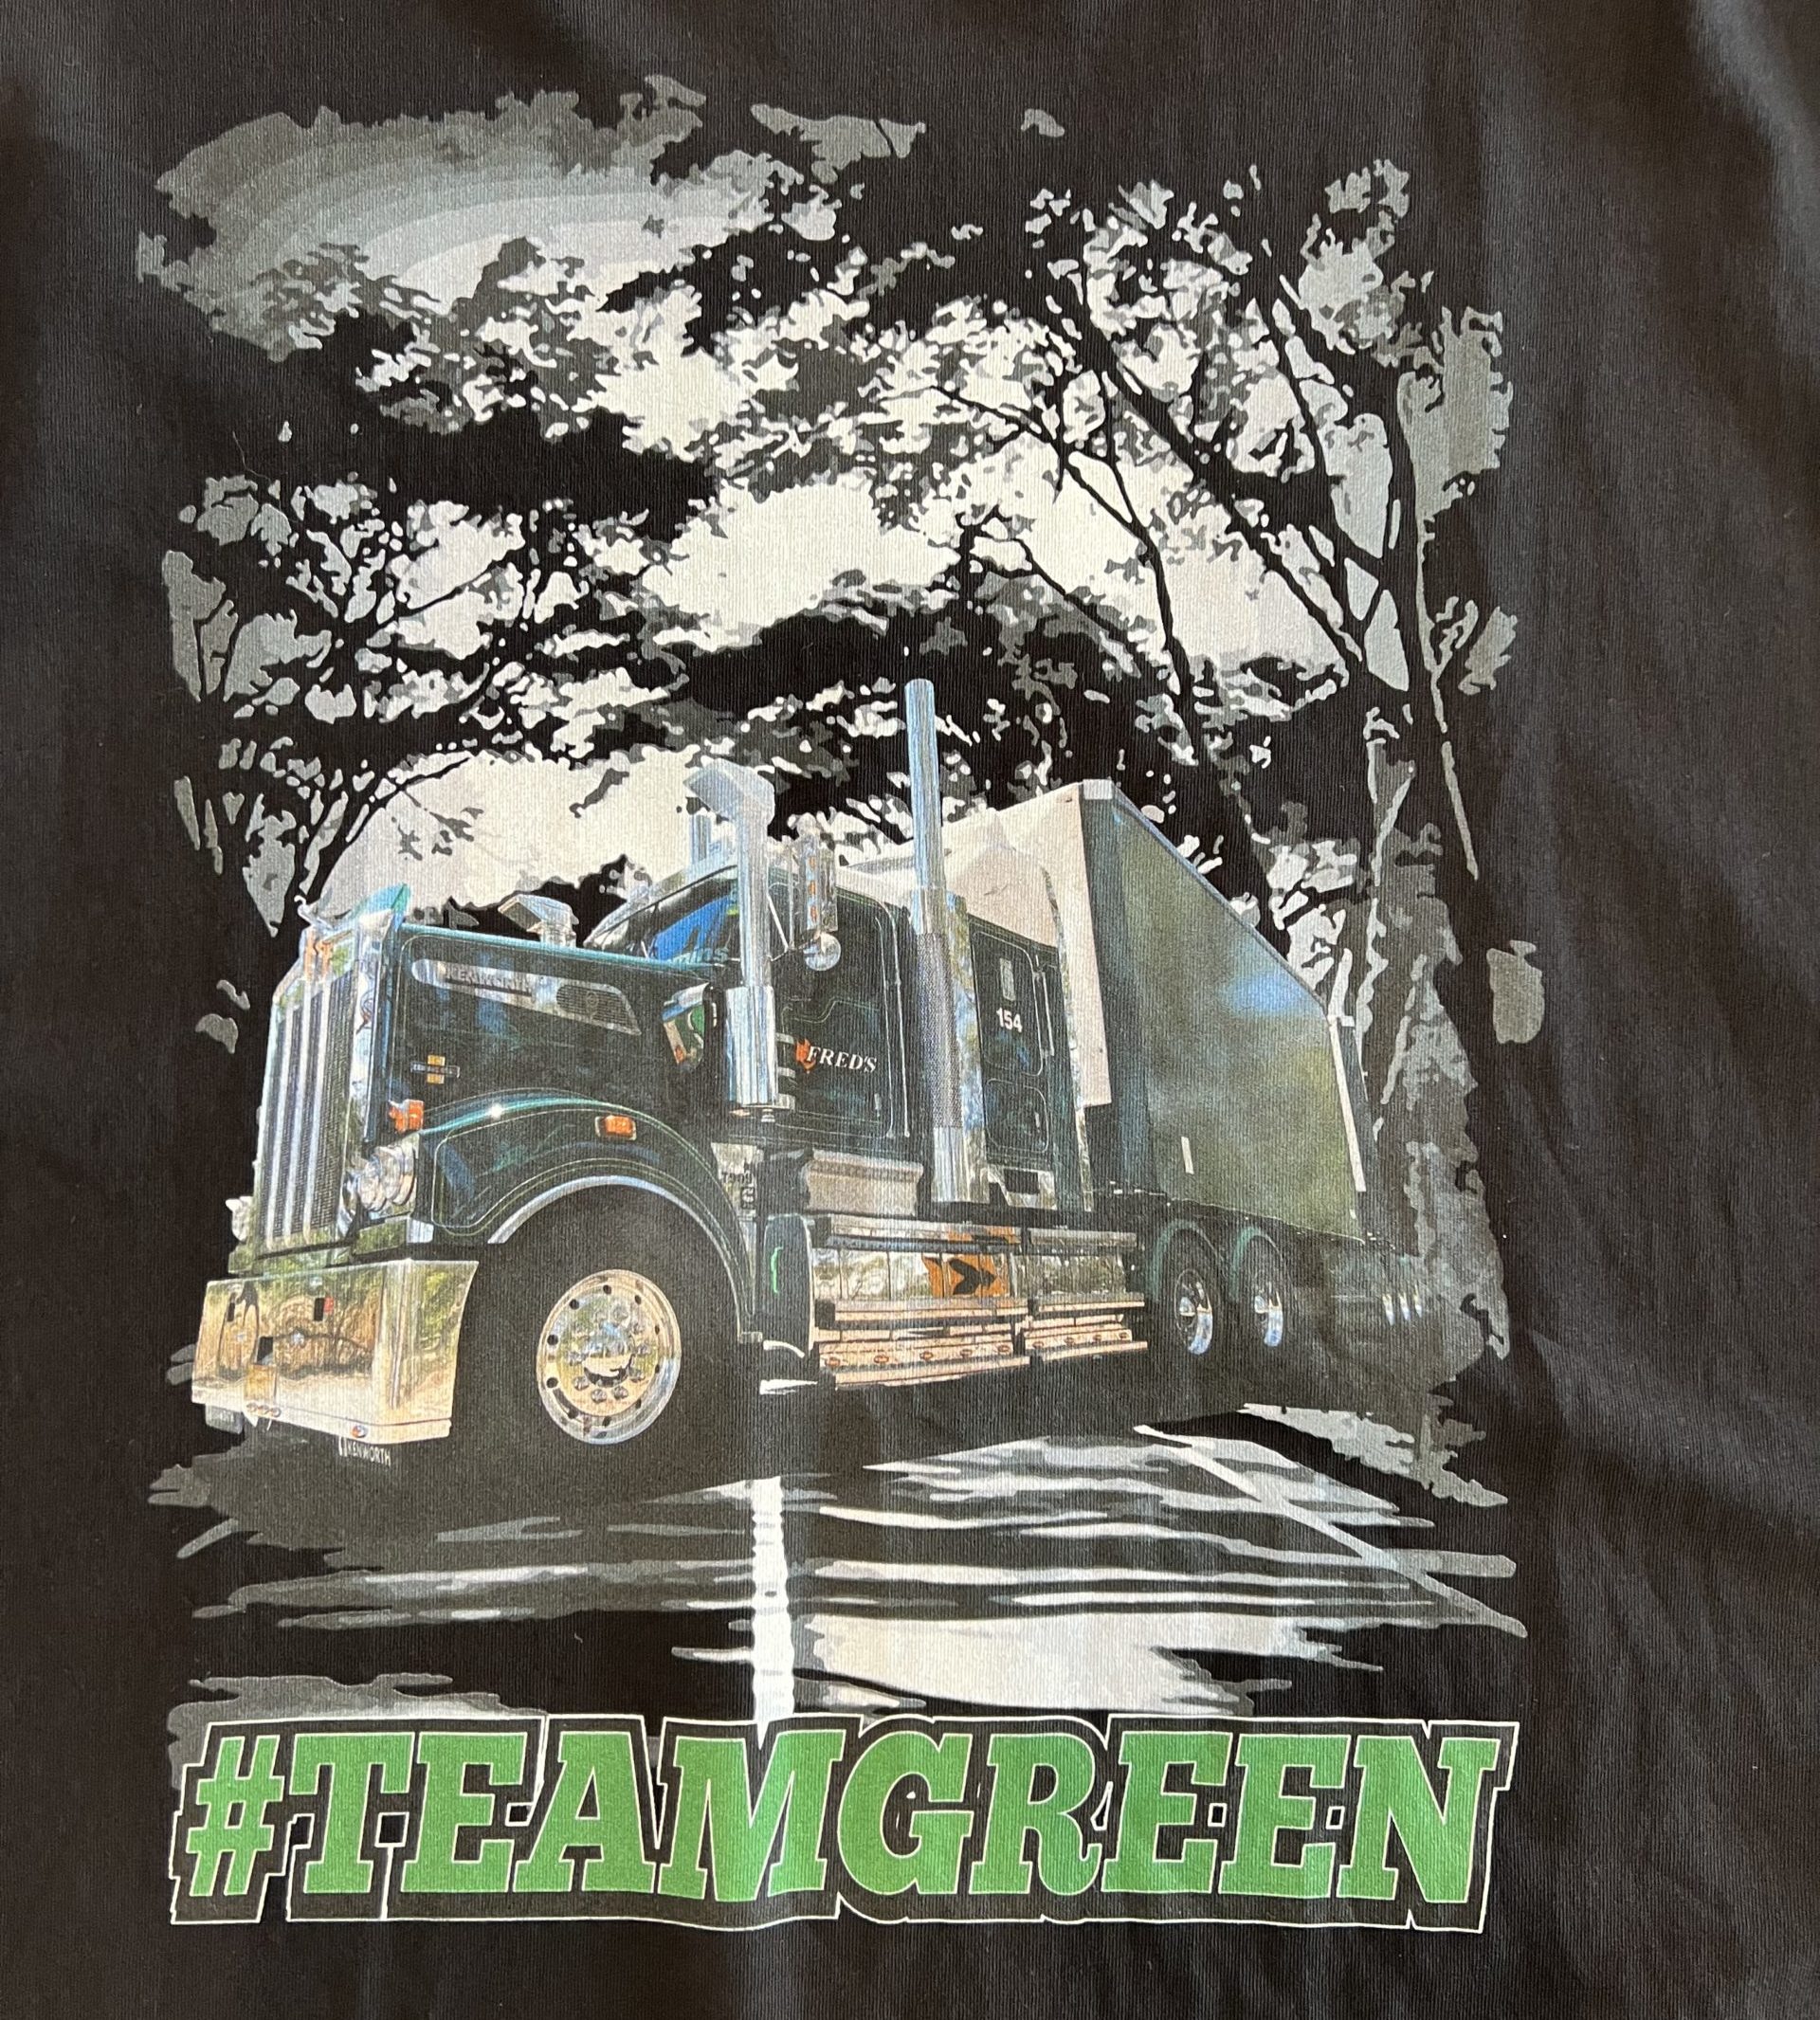 Fred’s Team Green T-Shirt